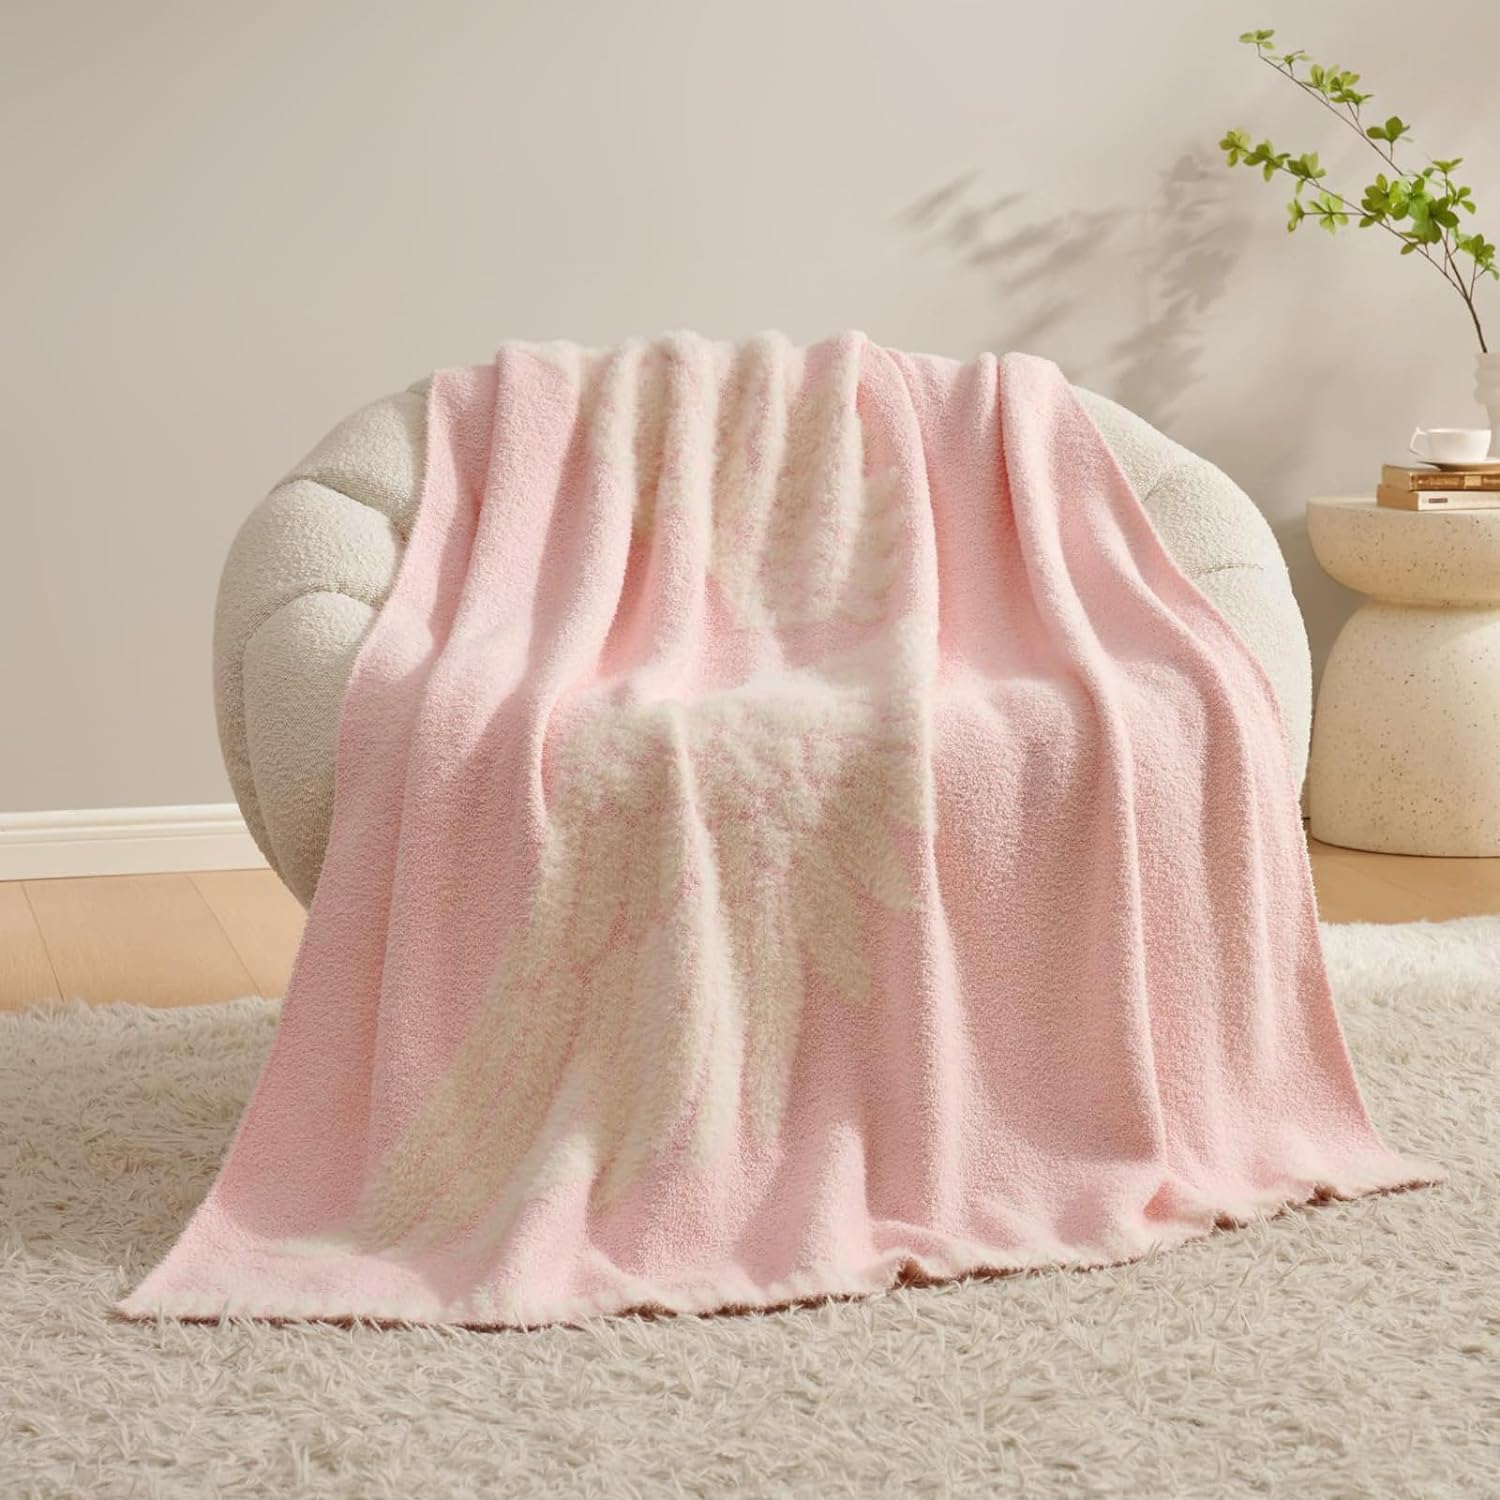 Angel Wings Knitted Throw Blanket – Snuggle Sac